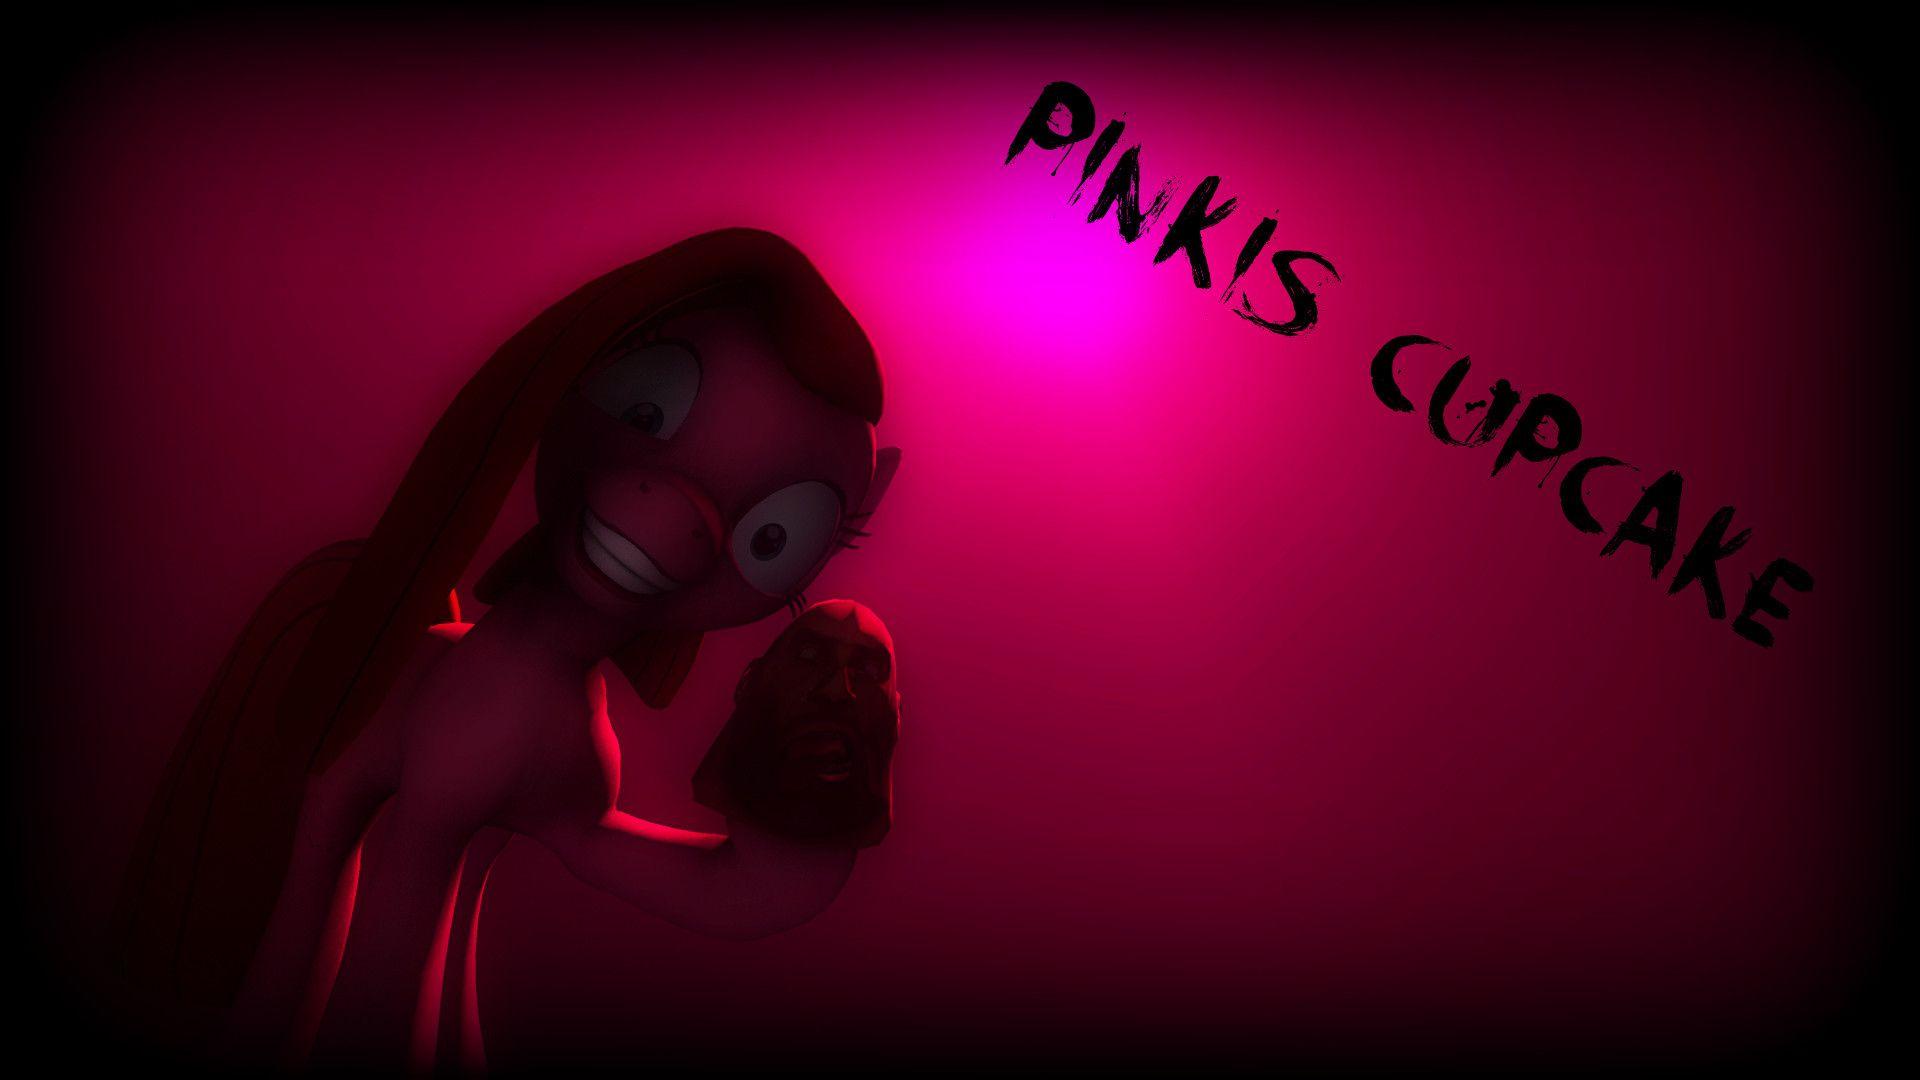 the elements of insanaty pinkis cupcake